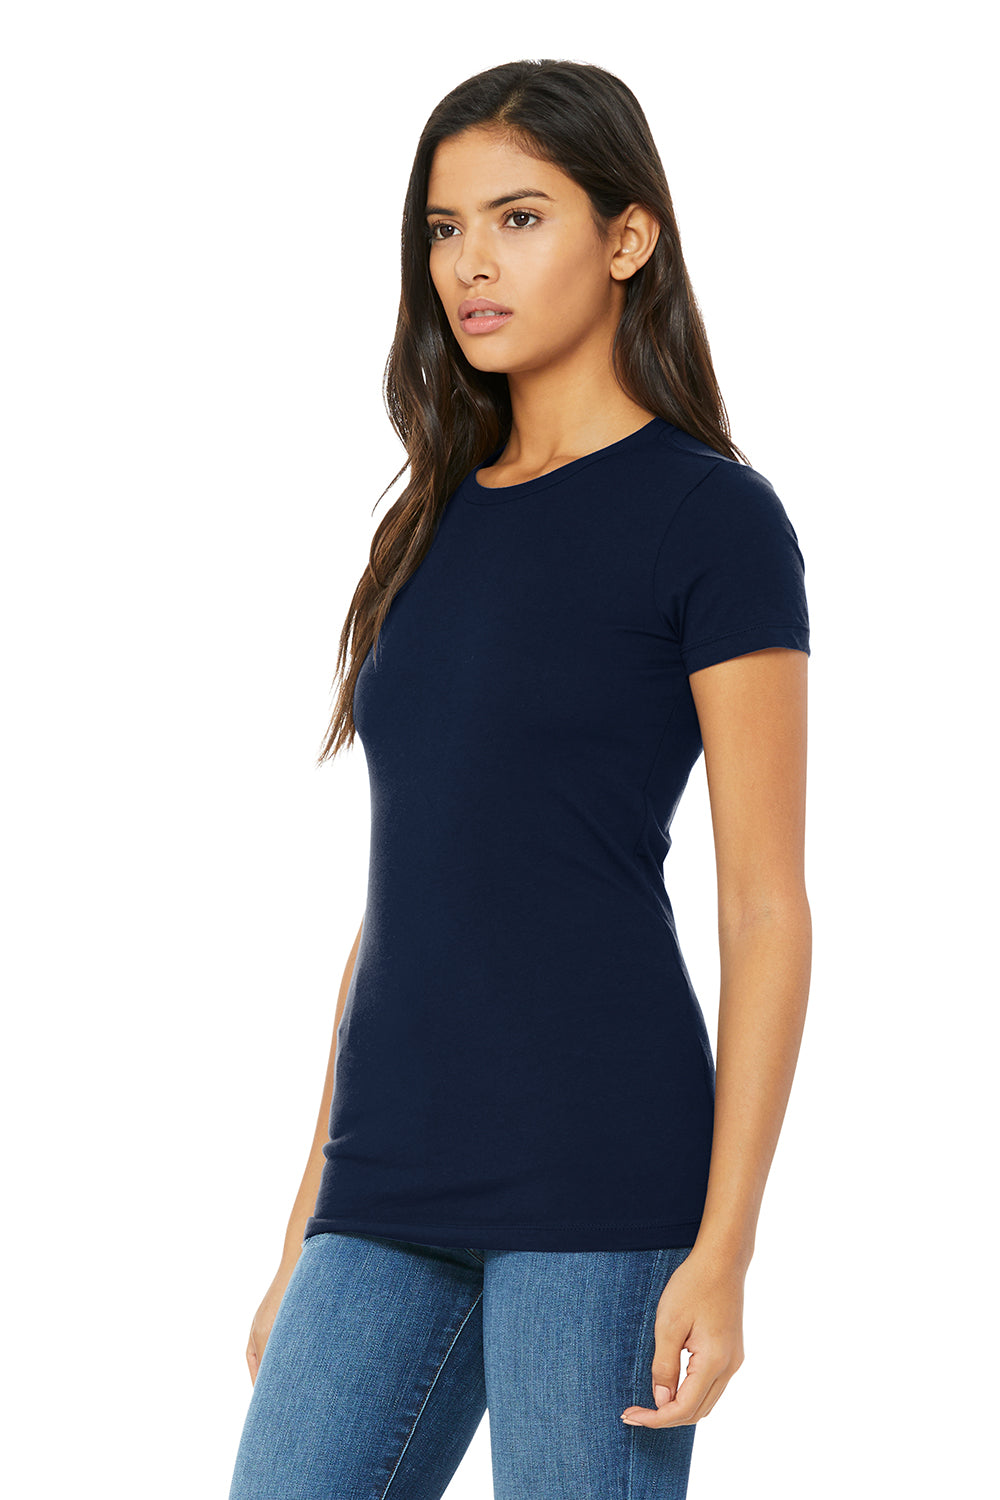 Bella + Canvas BC6004/6004 Womens The Favorite Short Sleeve Crewneck T-Shirt Navy Blue Model 3Q